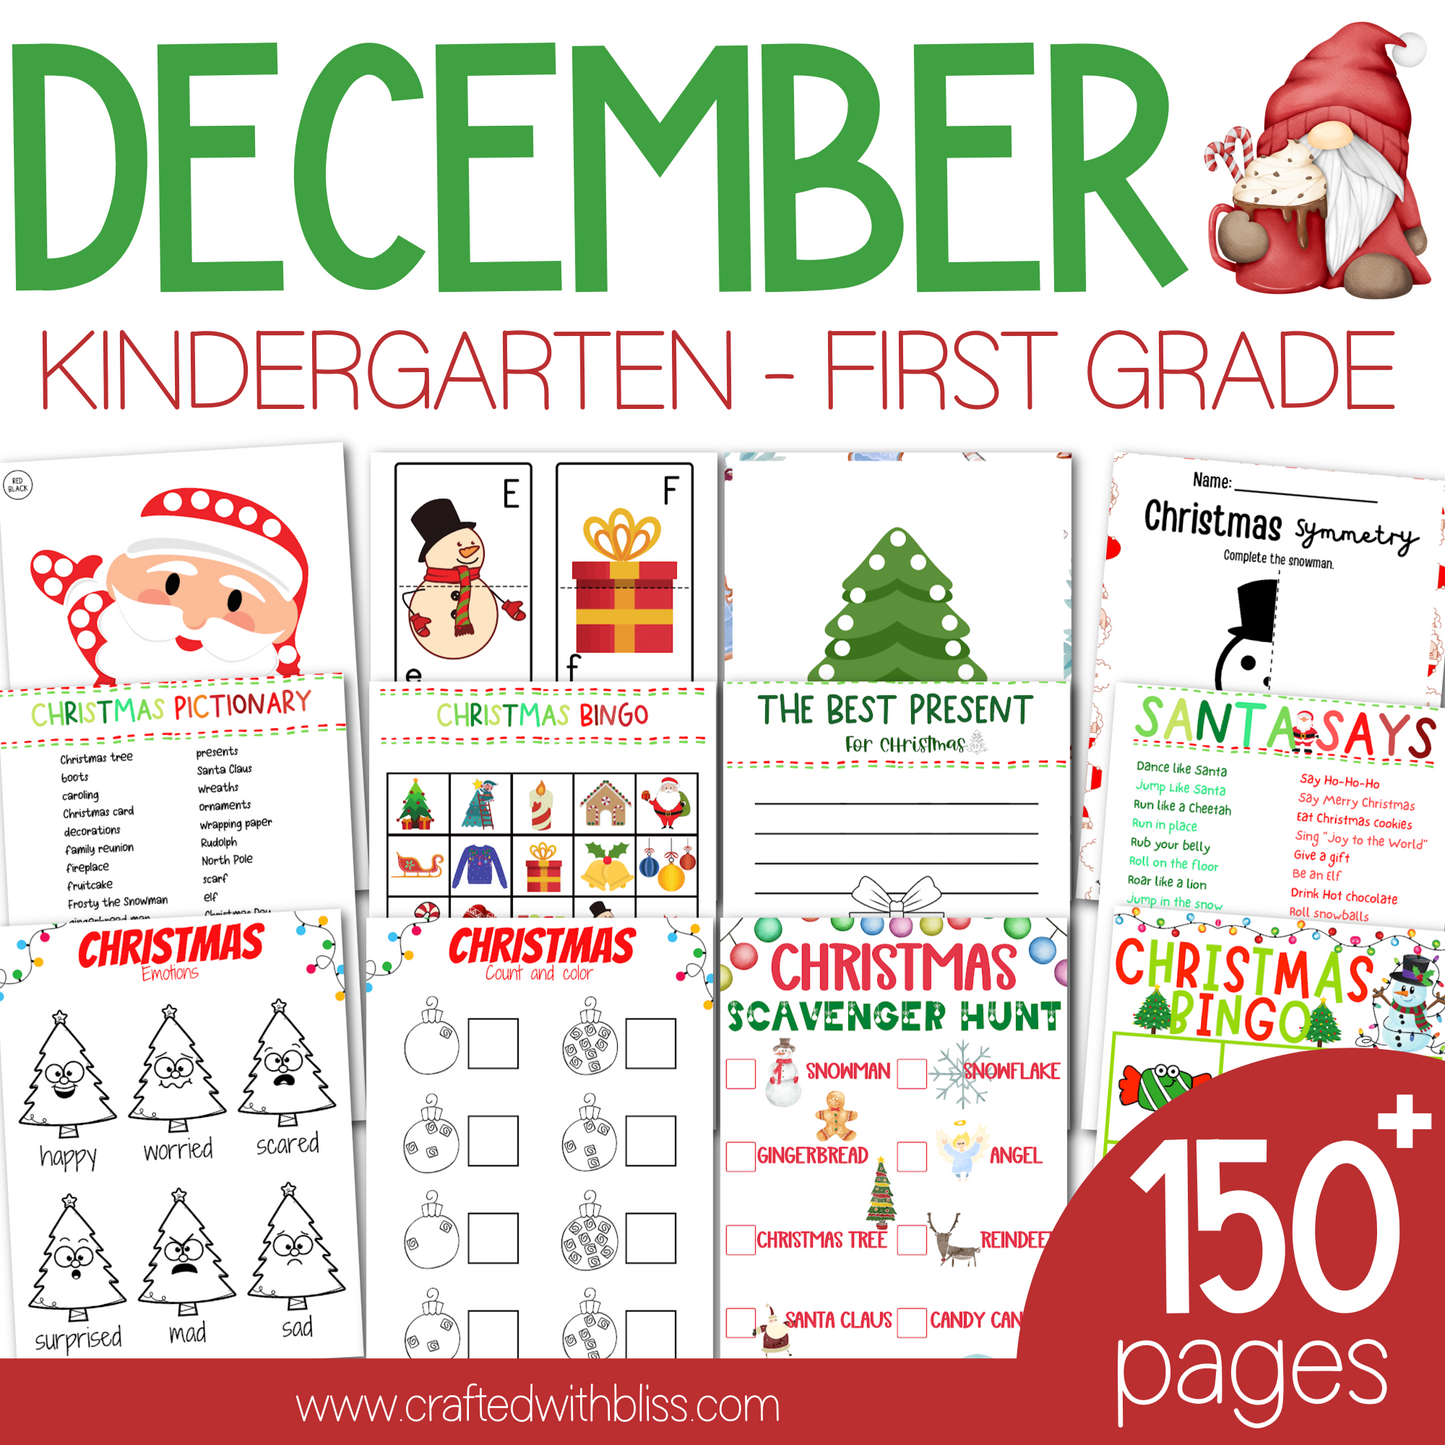 December Christmas Kindergarten - First Grade Activities Super Bundle, Christmas Party Classroom Games and Activities BINGO Cards Game Night